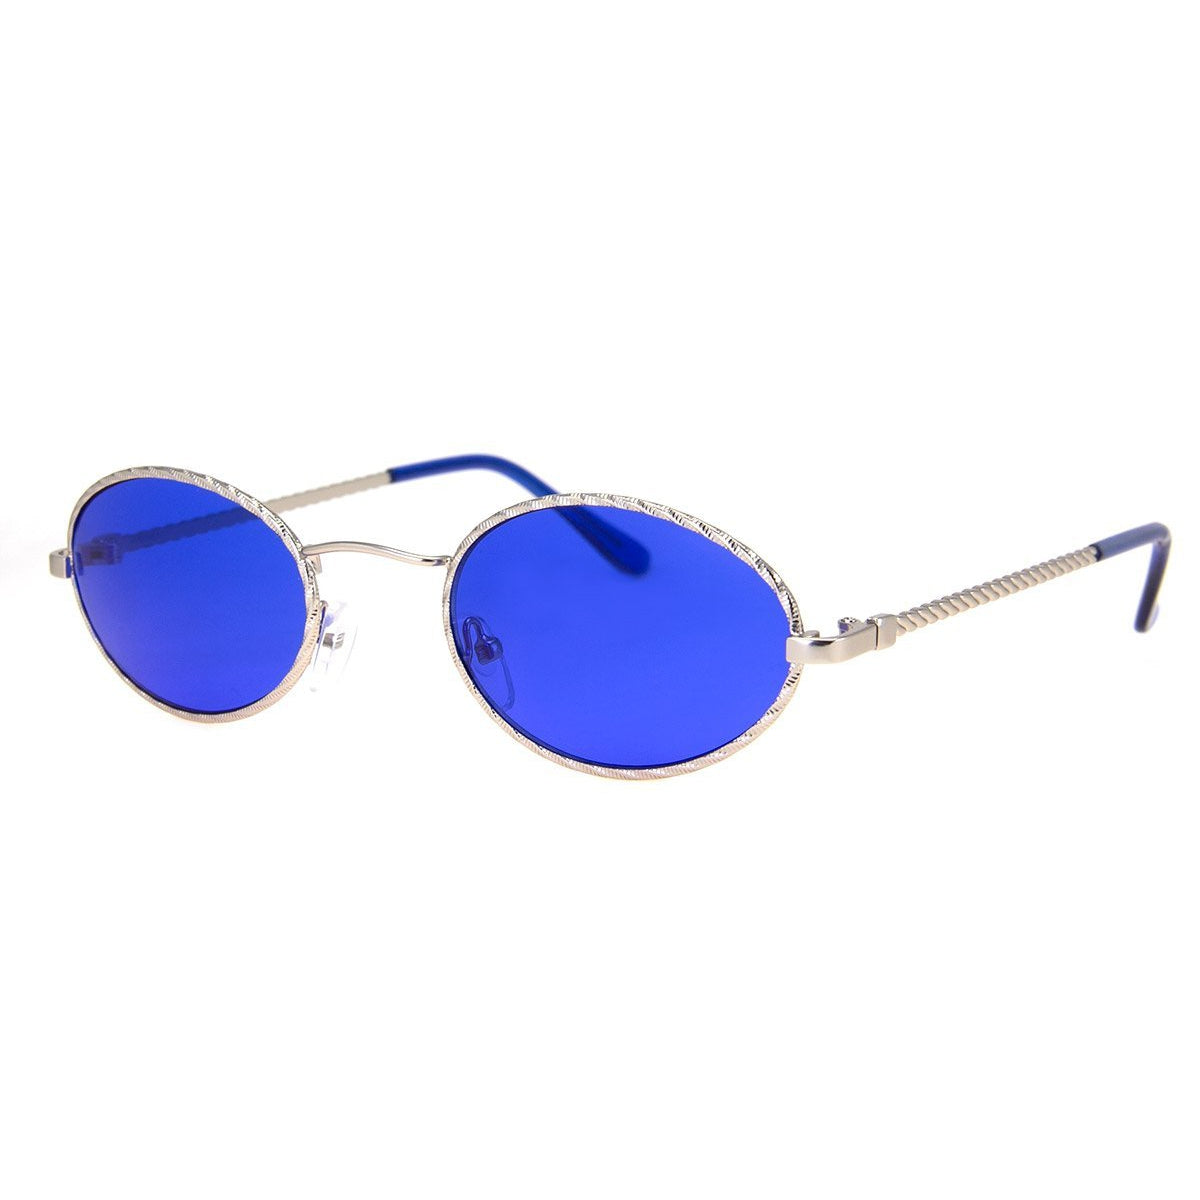 Priceless Sunglasses - Silver Blue